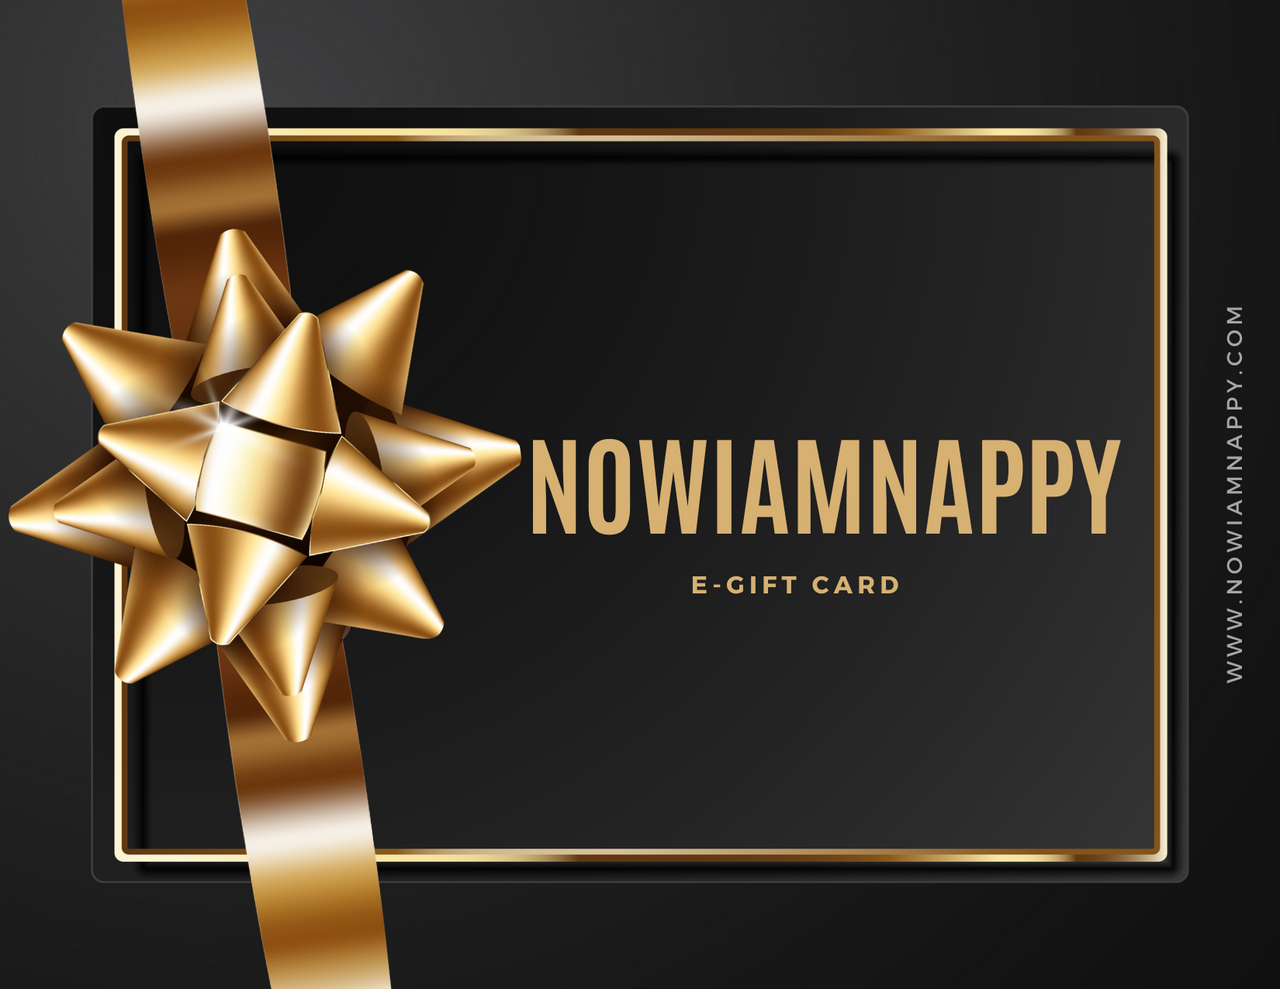 NowIamNappy E-Gift Card